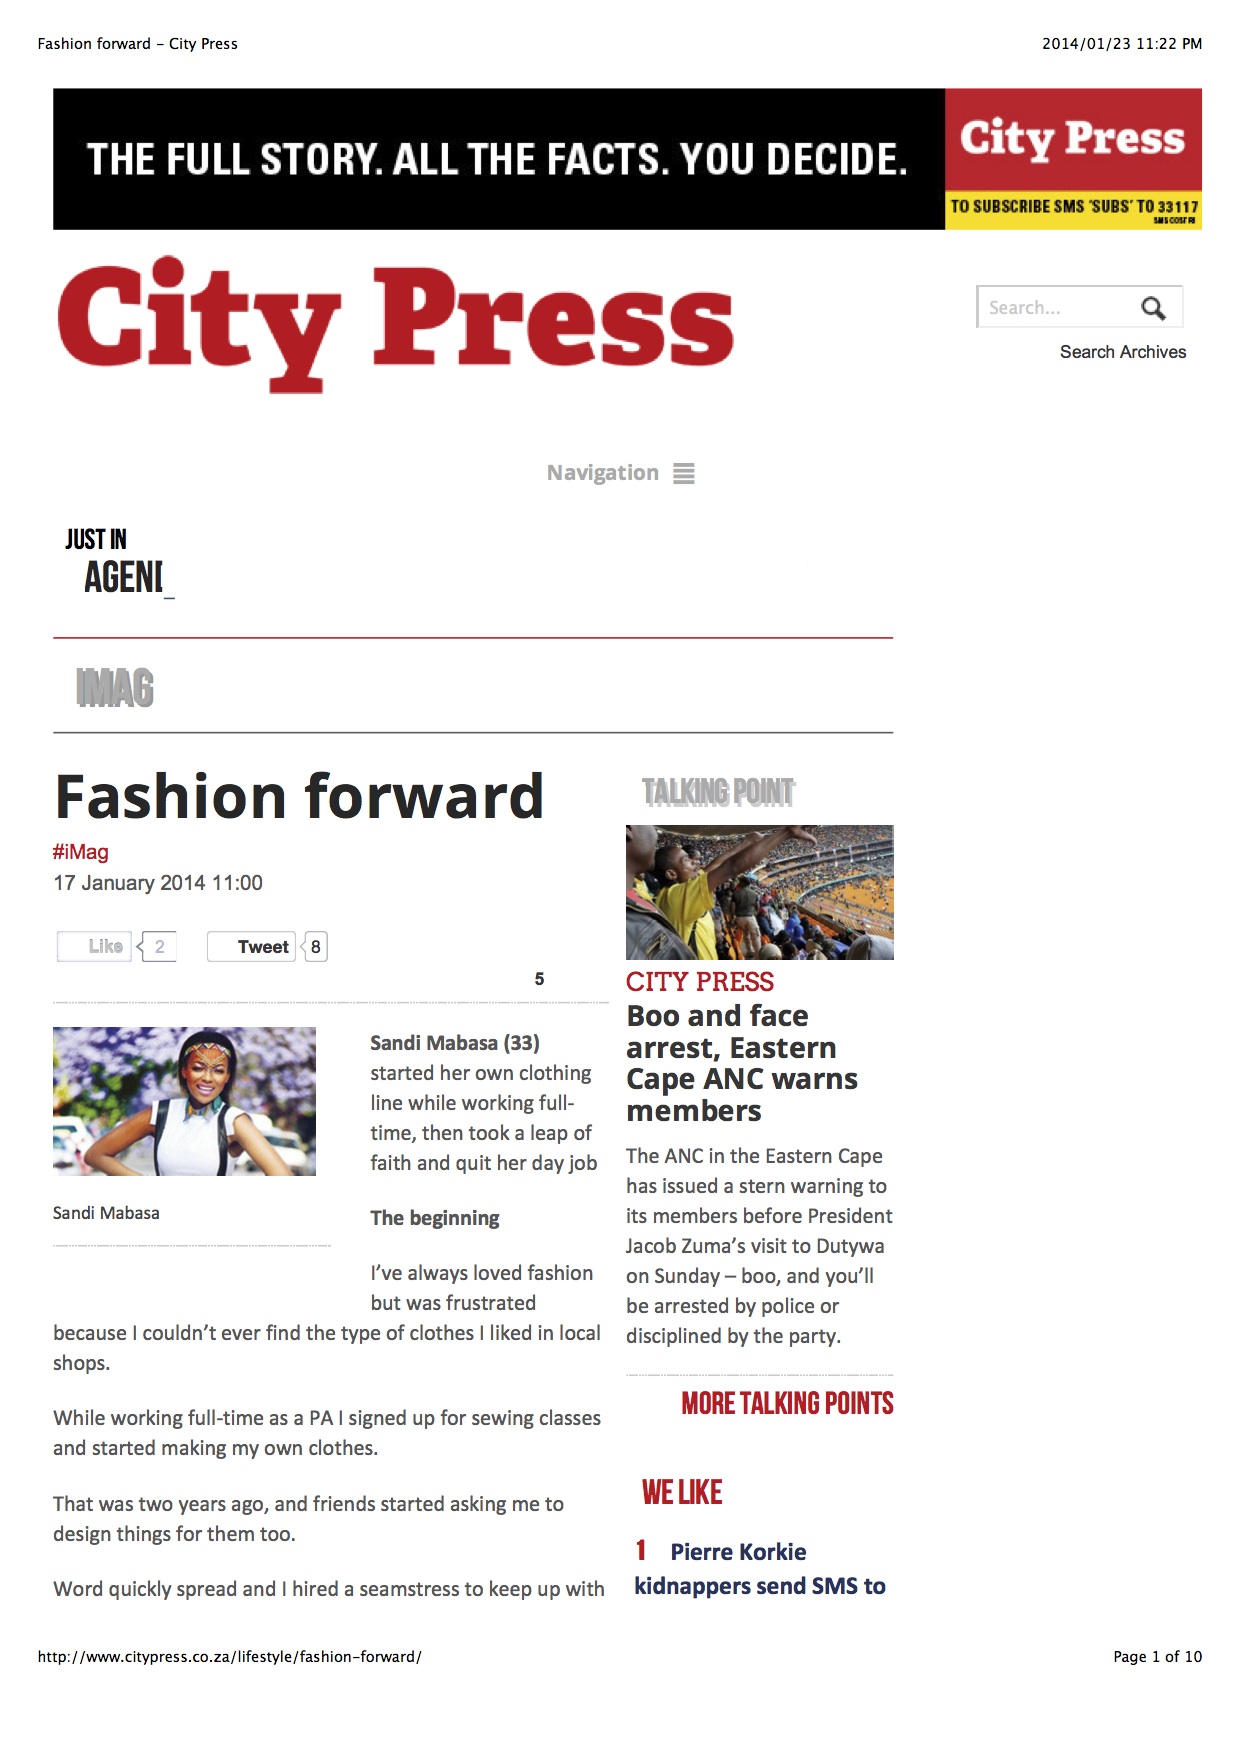 City Press-News24